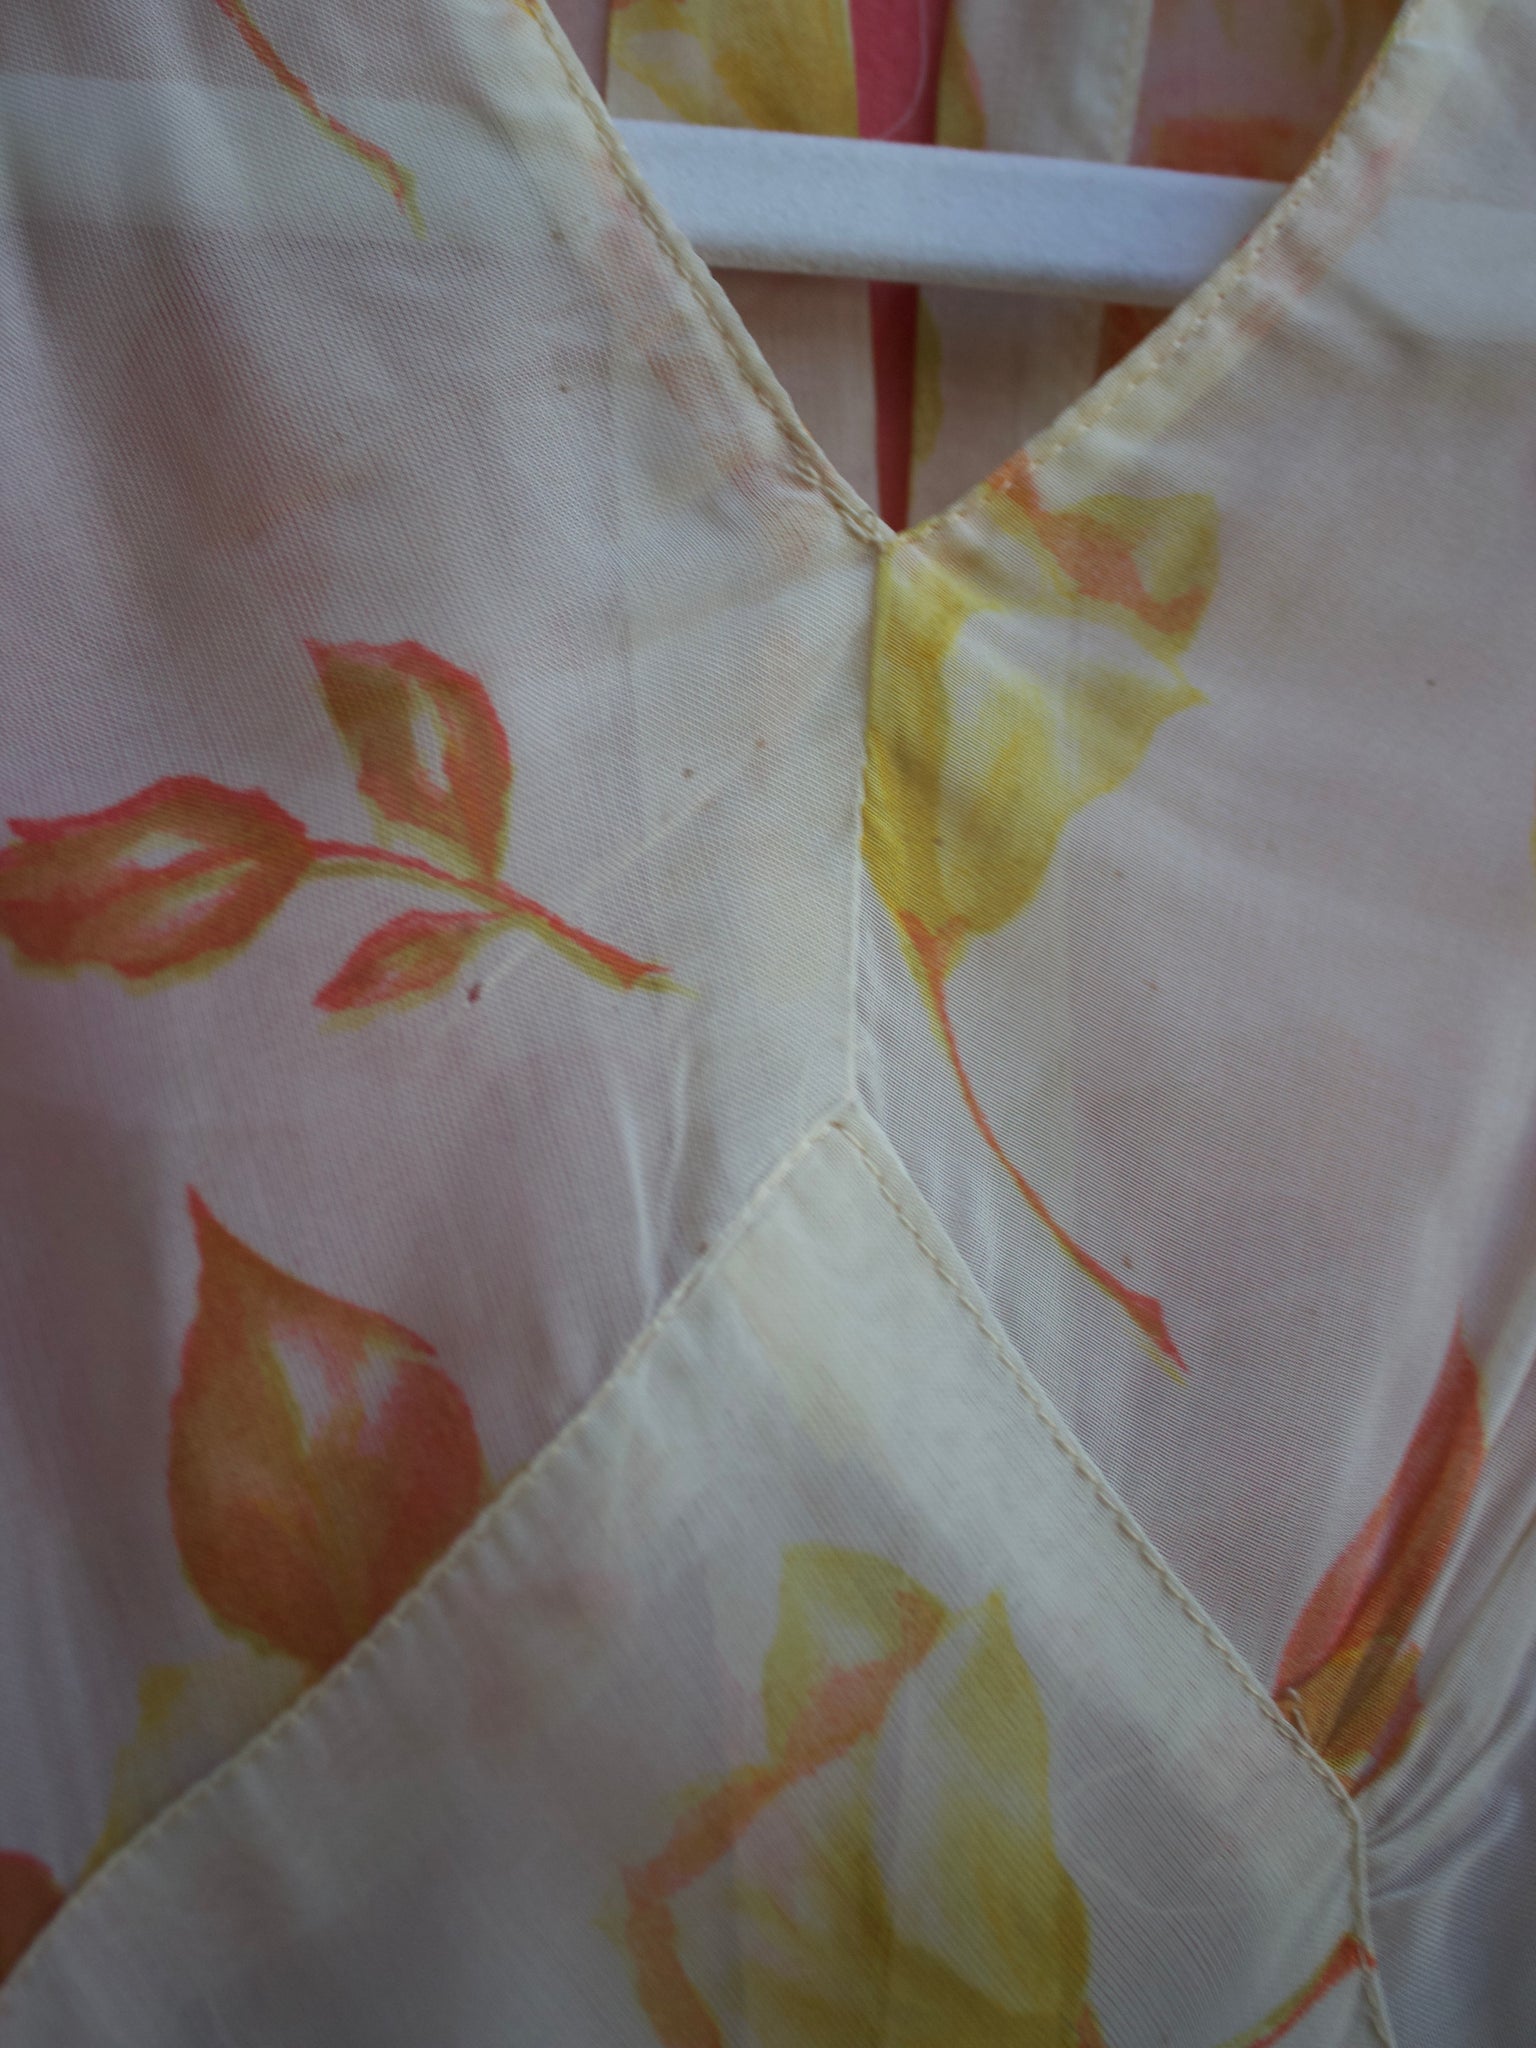 1930s Two Piece Sheer Floral Bias Cut Dress & Open Back Bolero Set